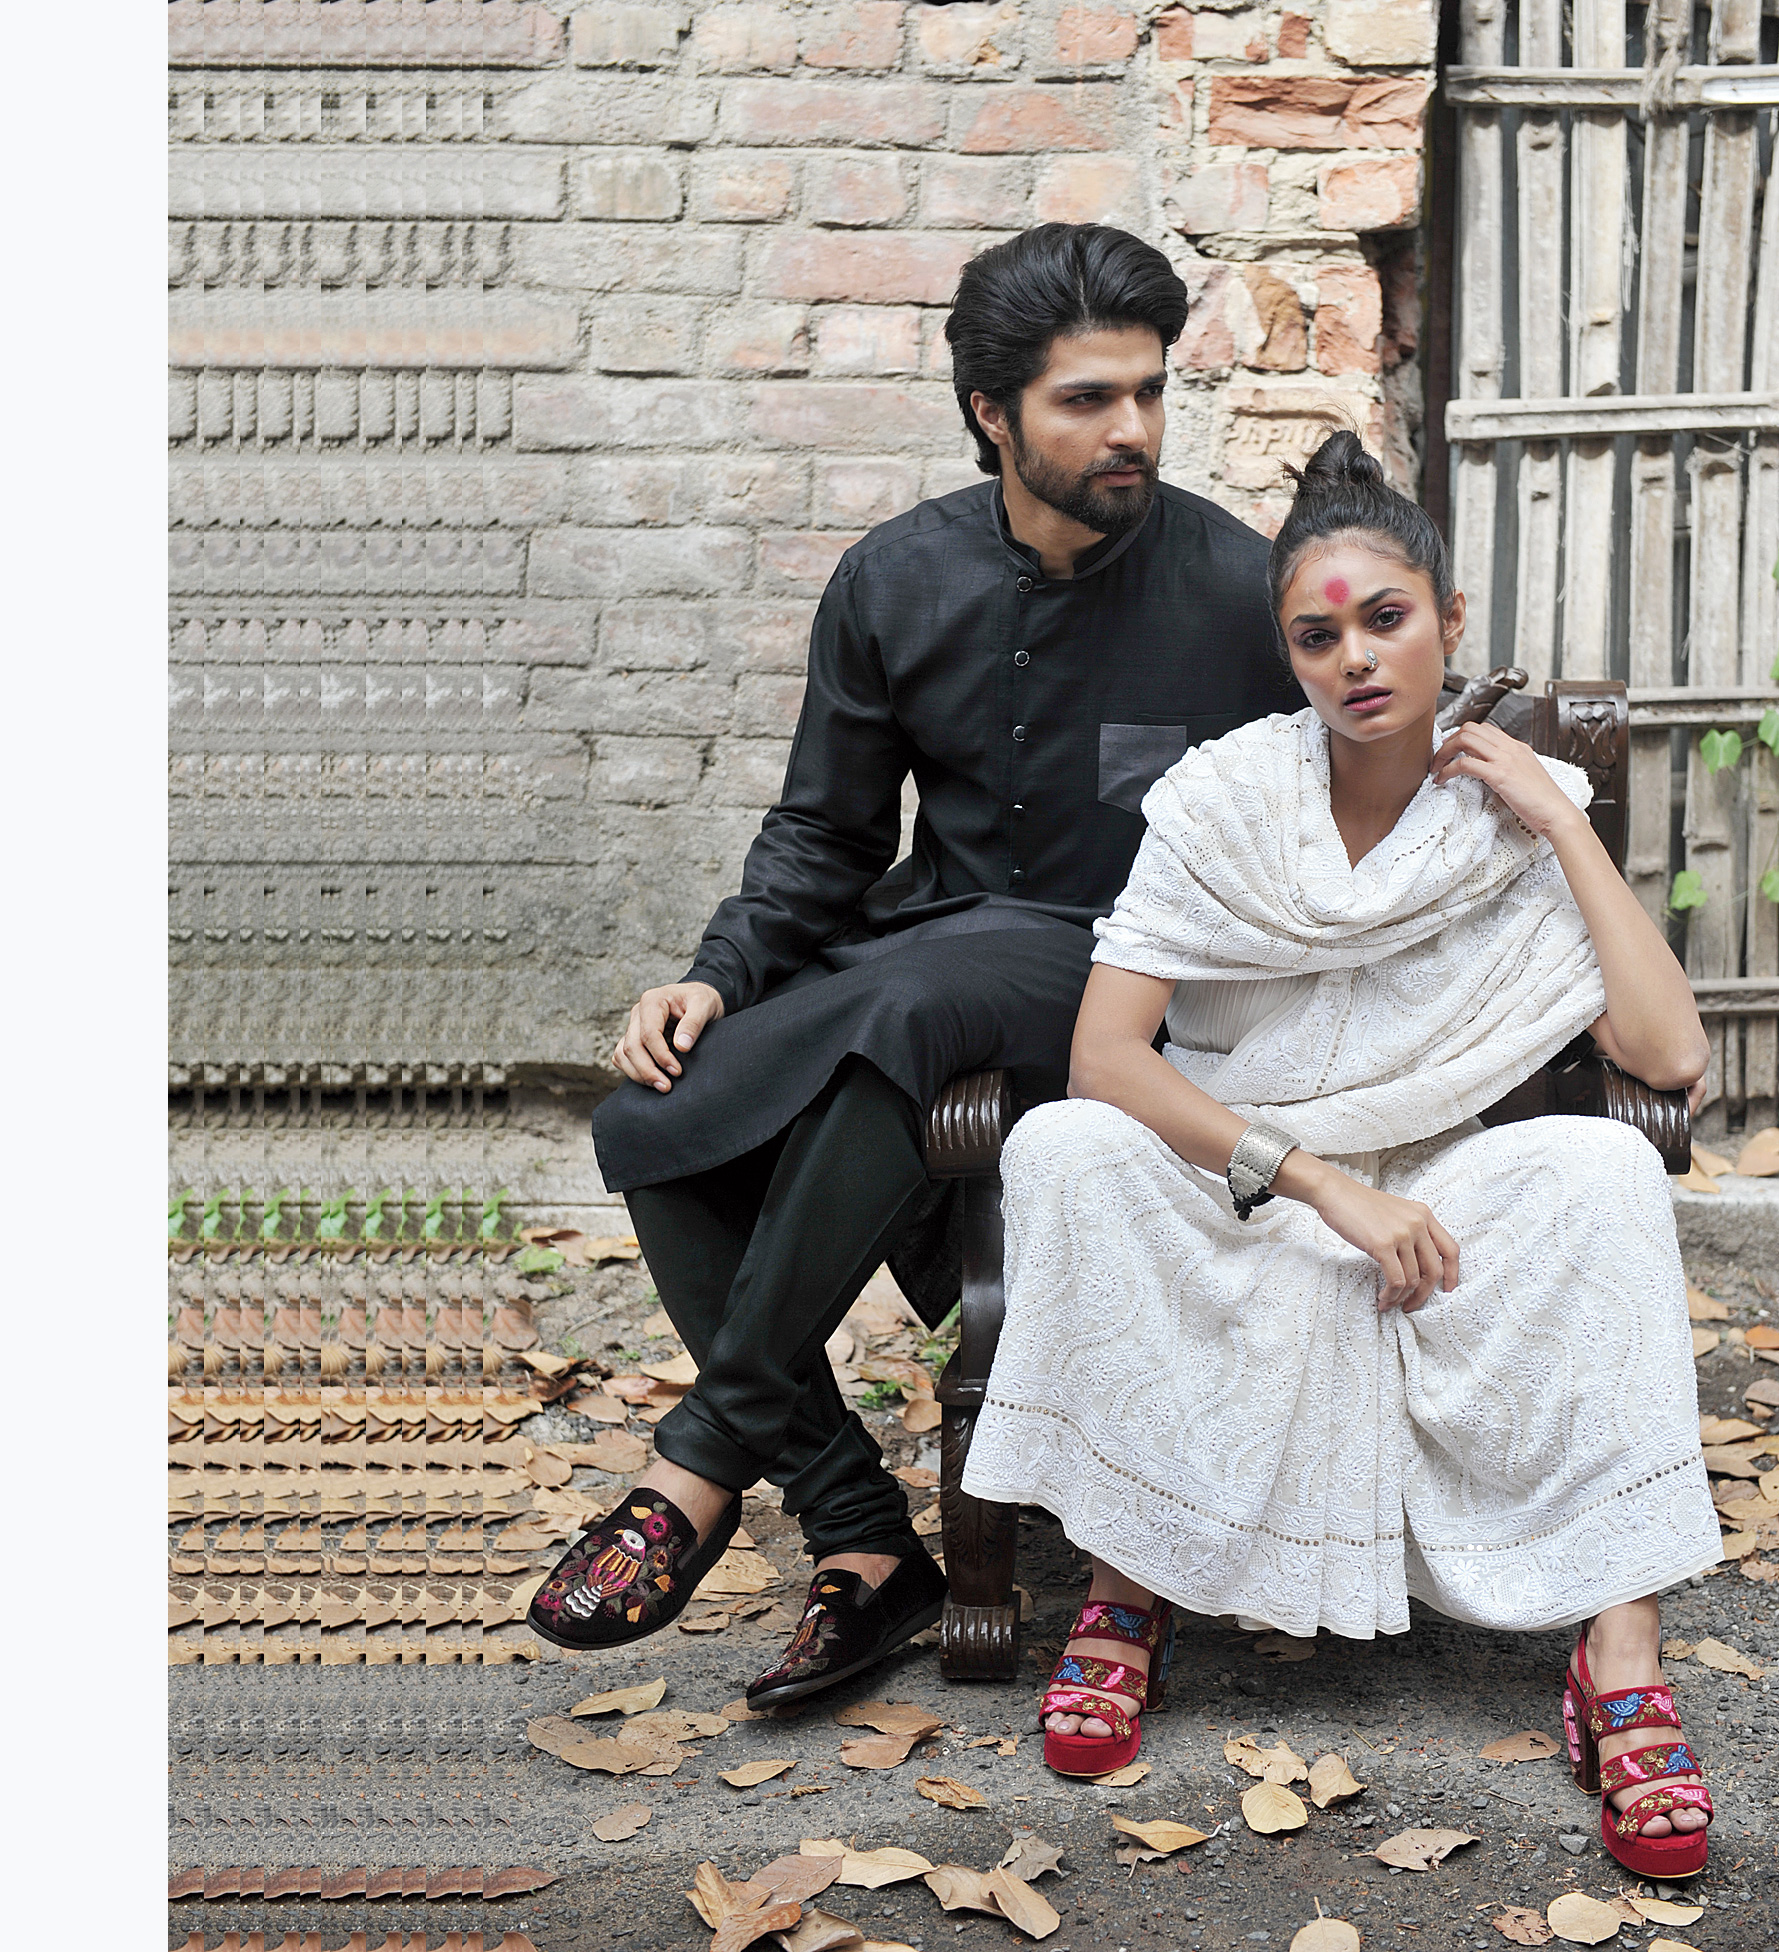 Palace on heels: Rohan Arora brings you 